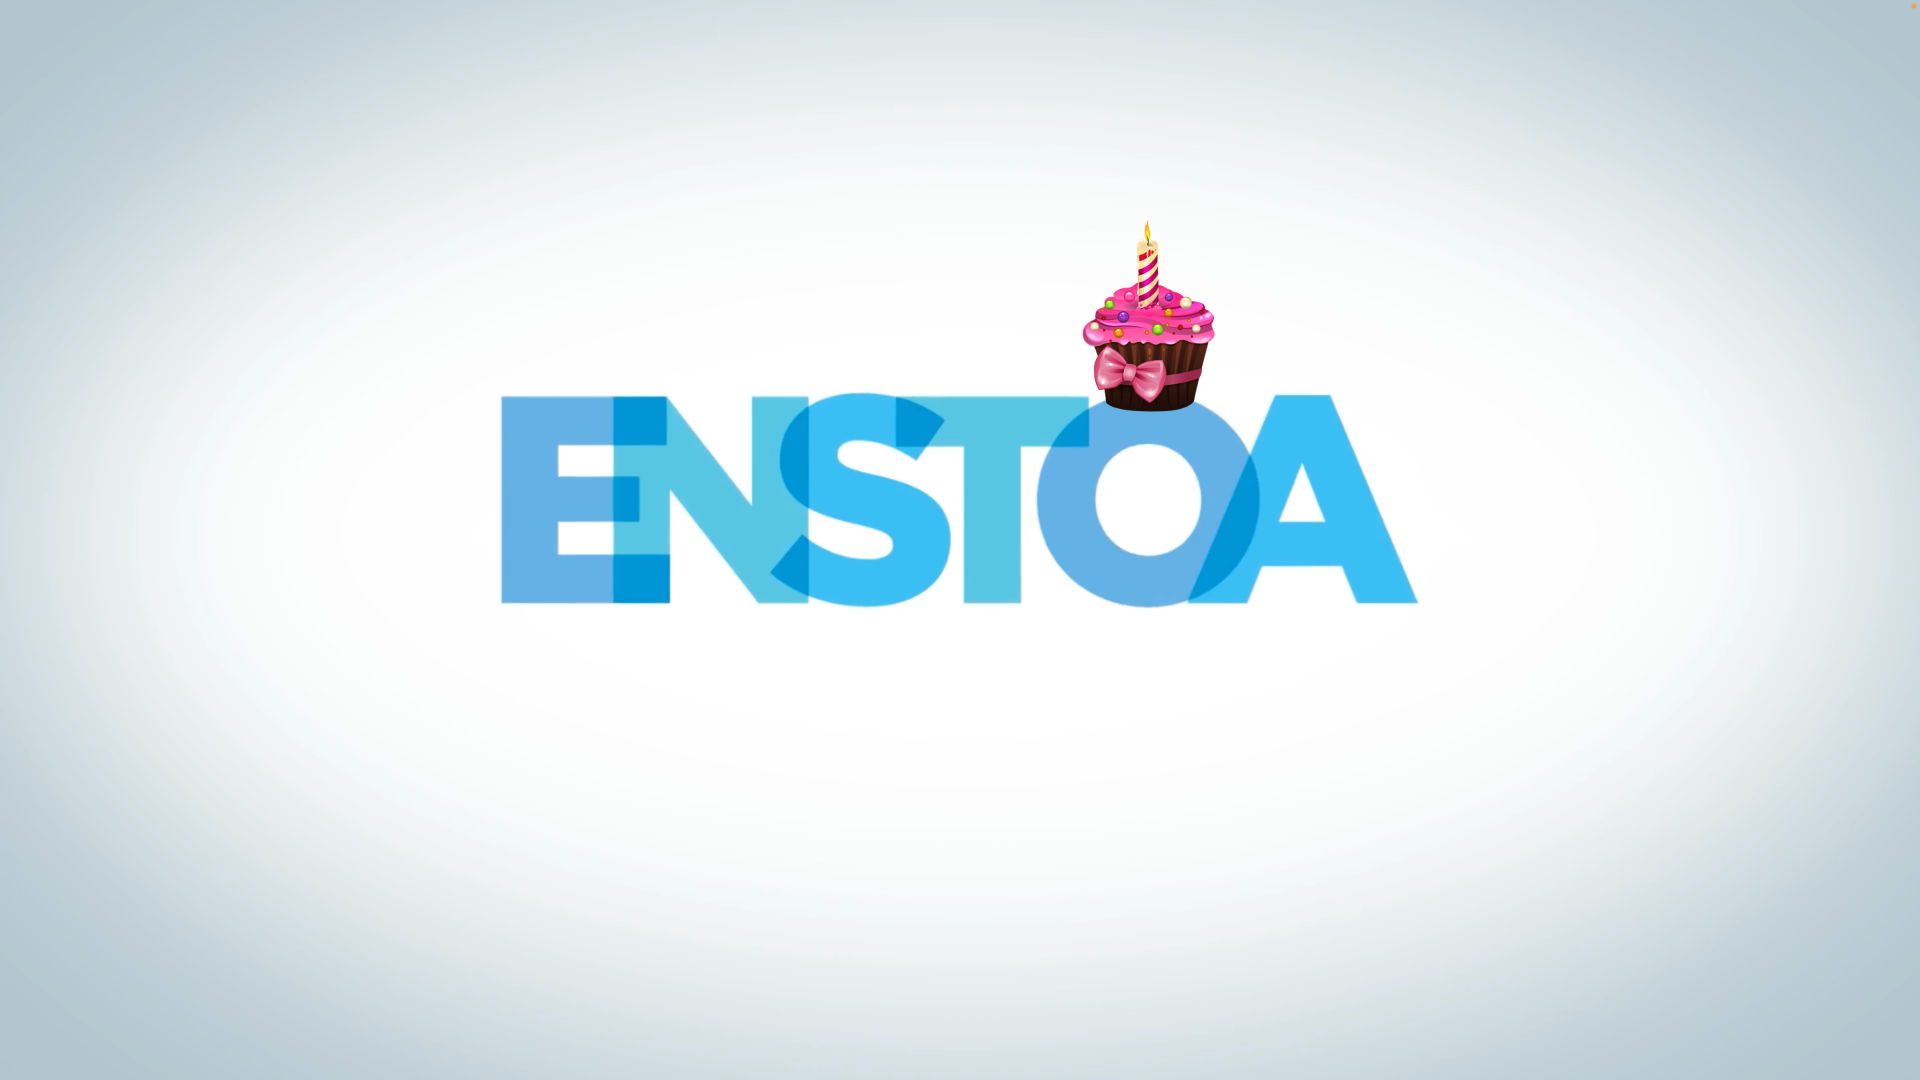 enstoa logo with birthday cupcake